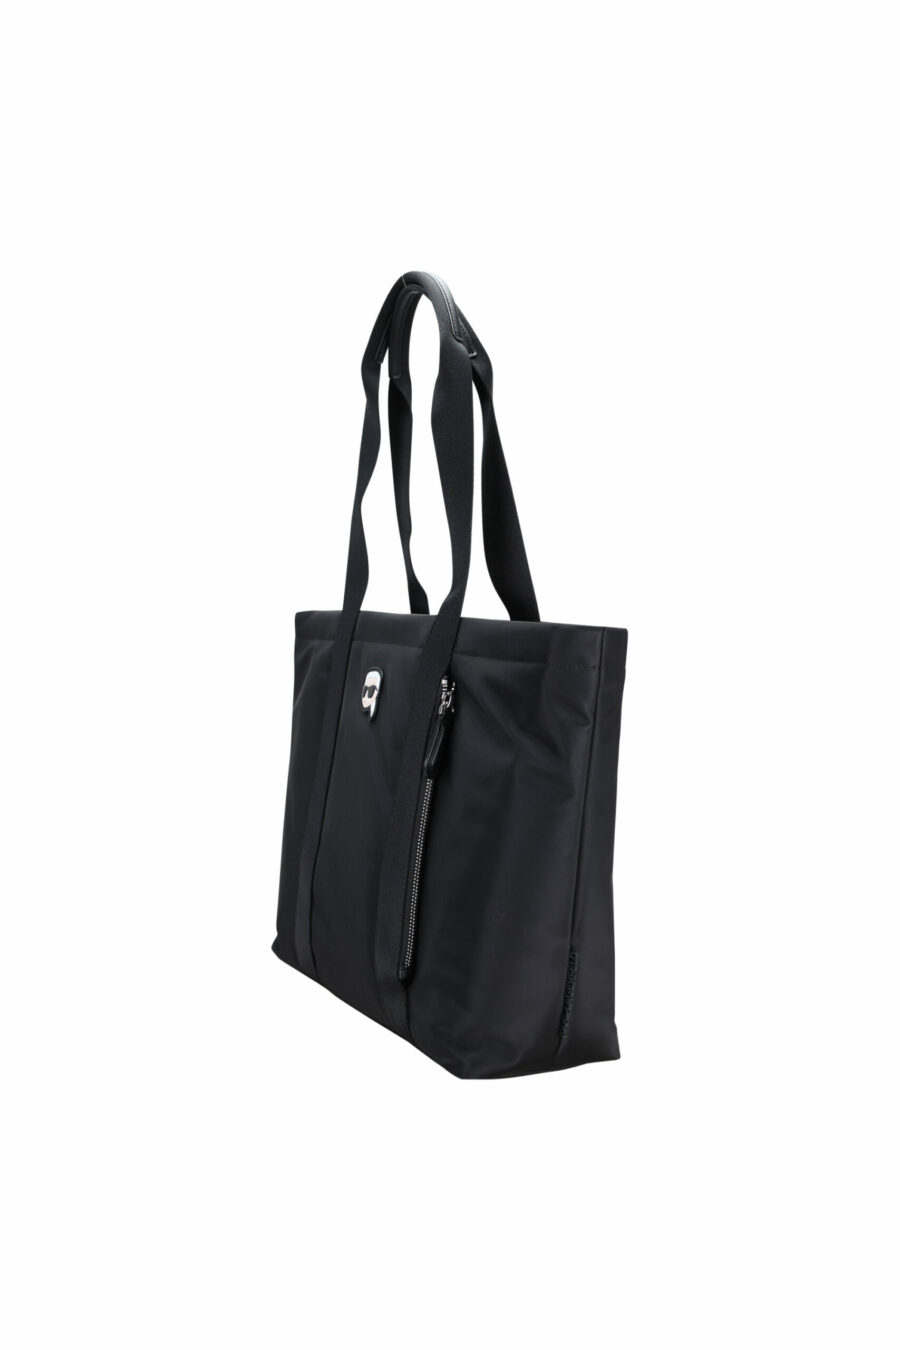 Black nylon tote bag with mini logo "karl" - 8720744417651 1 scaled